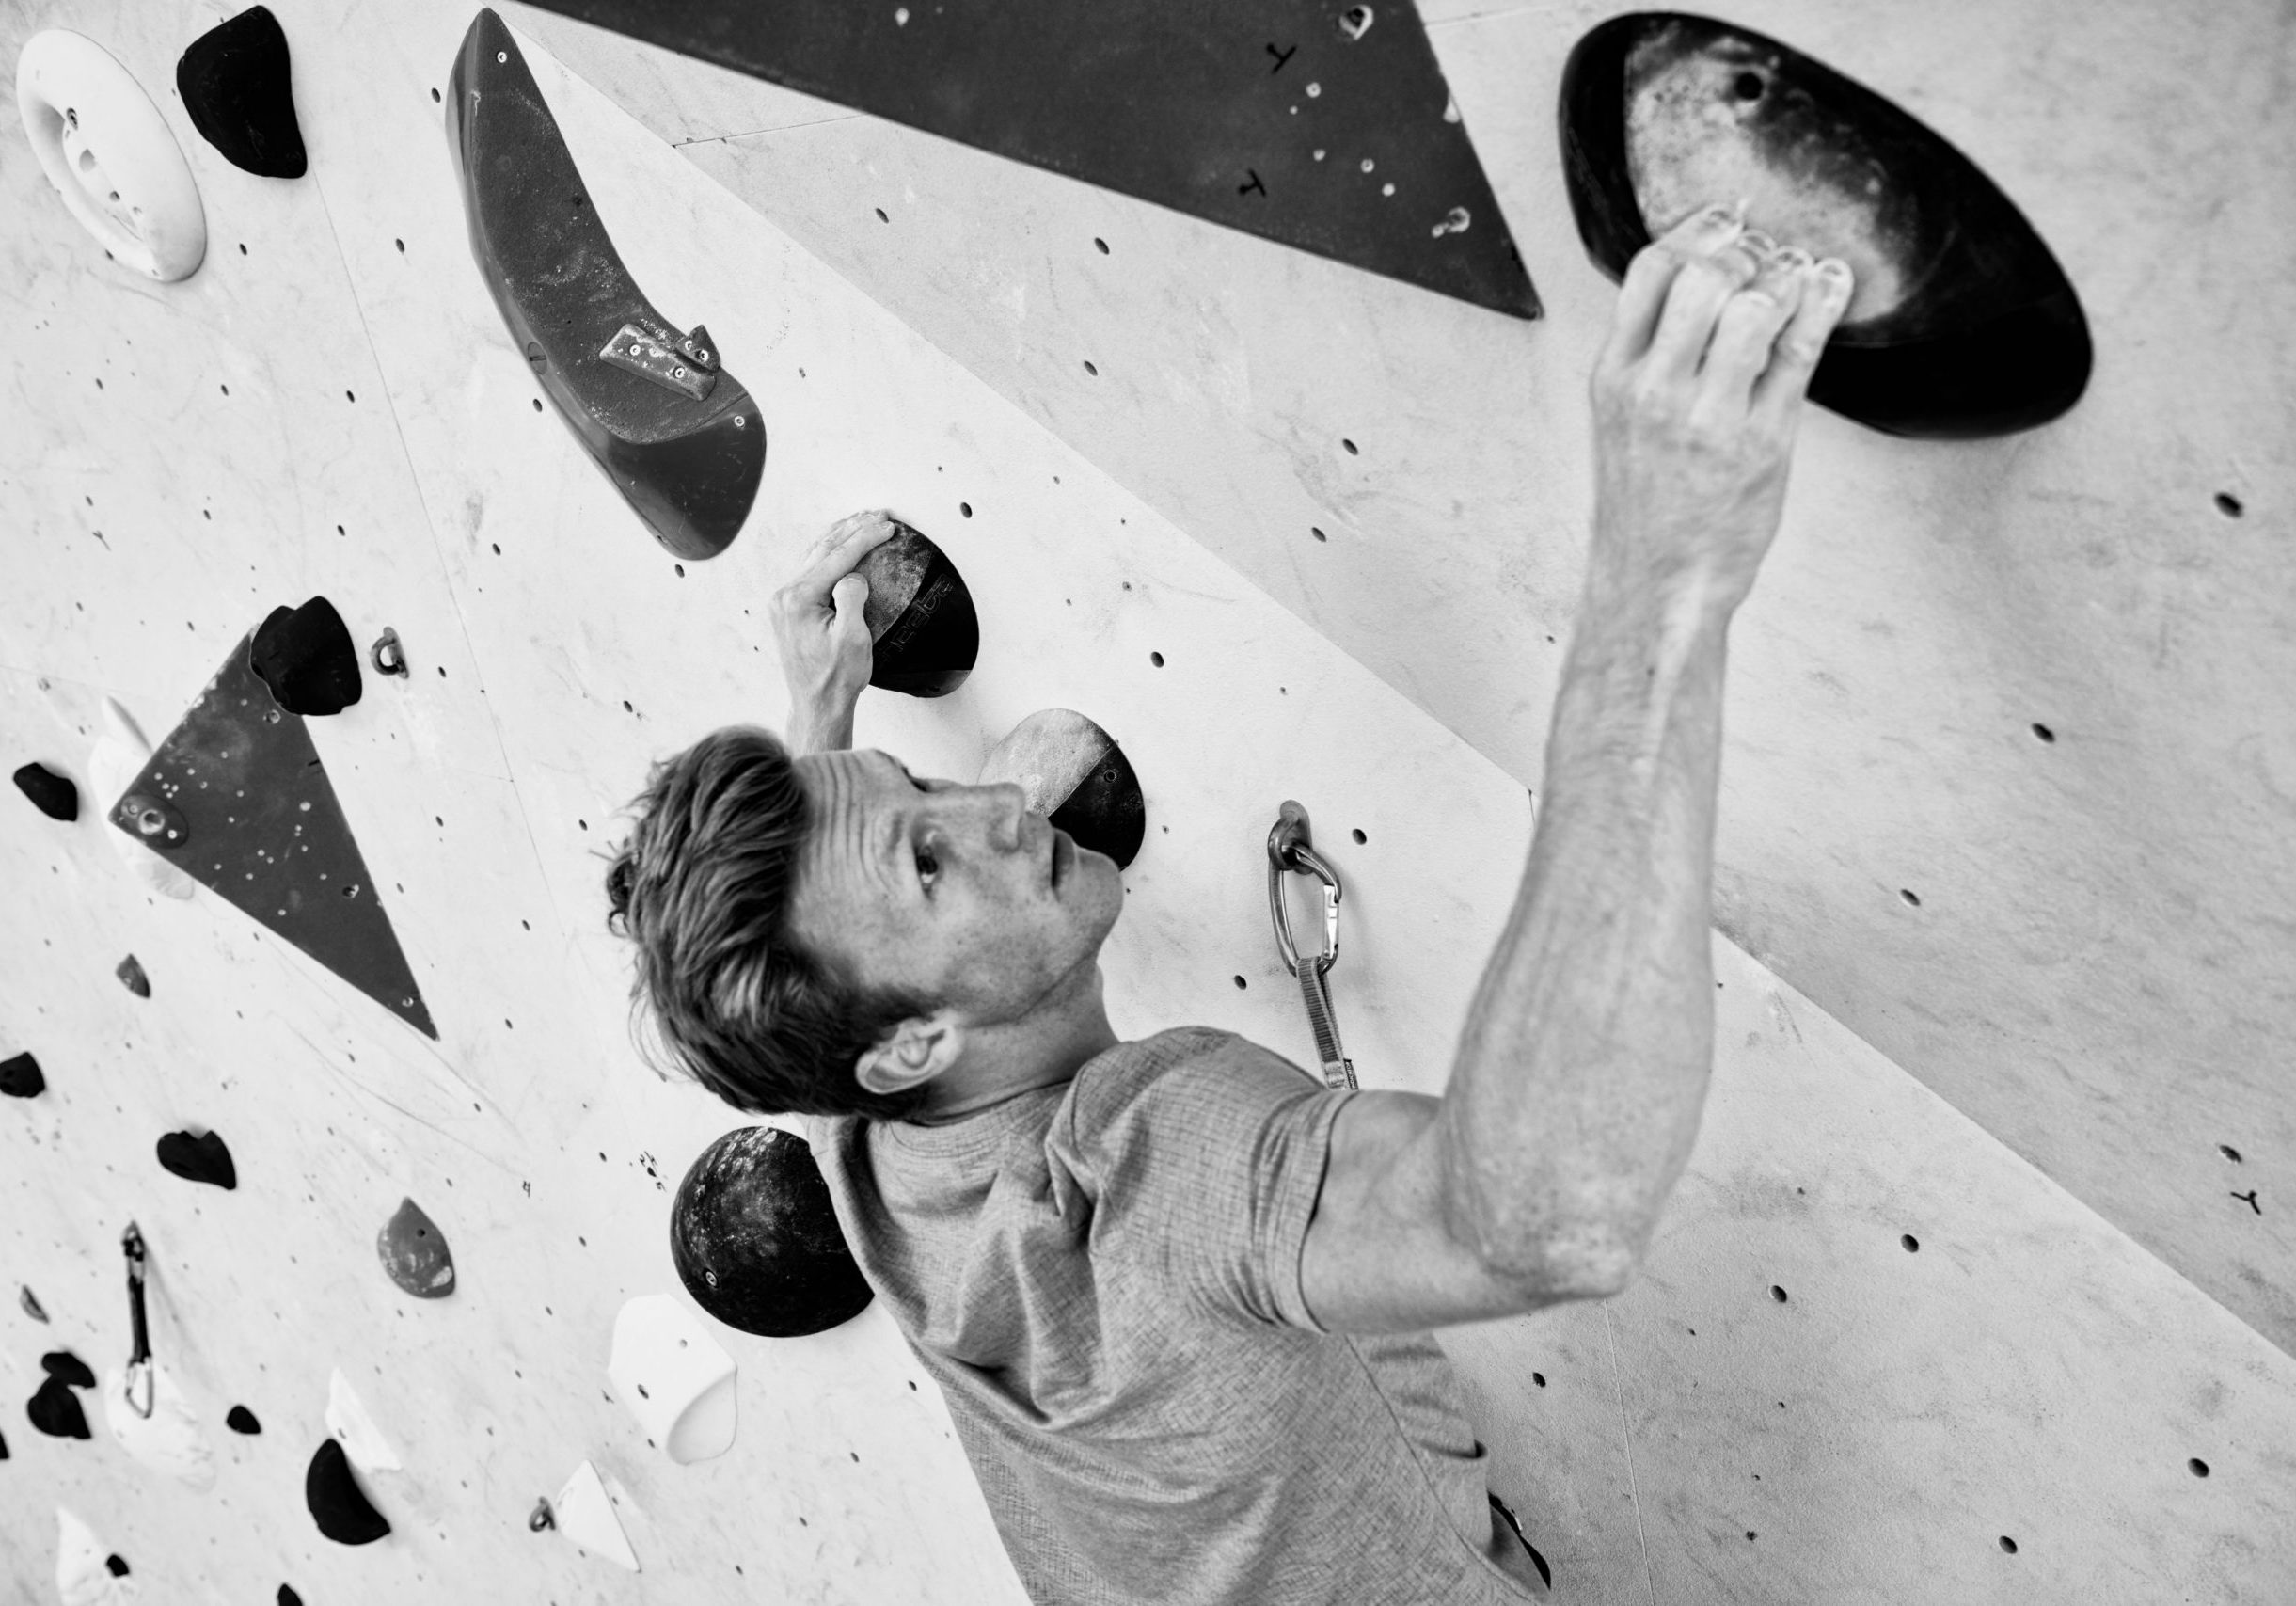 Jakob Schubert, Climbing Pro Team Athlete, Bouldern, Kollektion Winter 19/20, Collection Winter 19/20, Kletterhalle